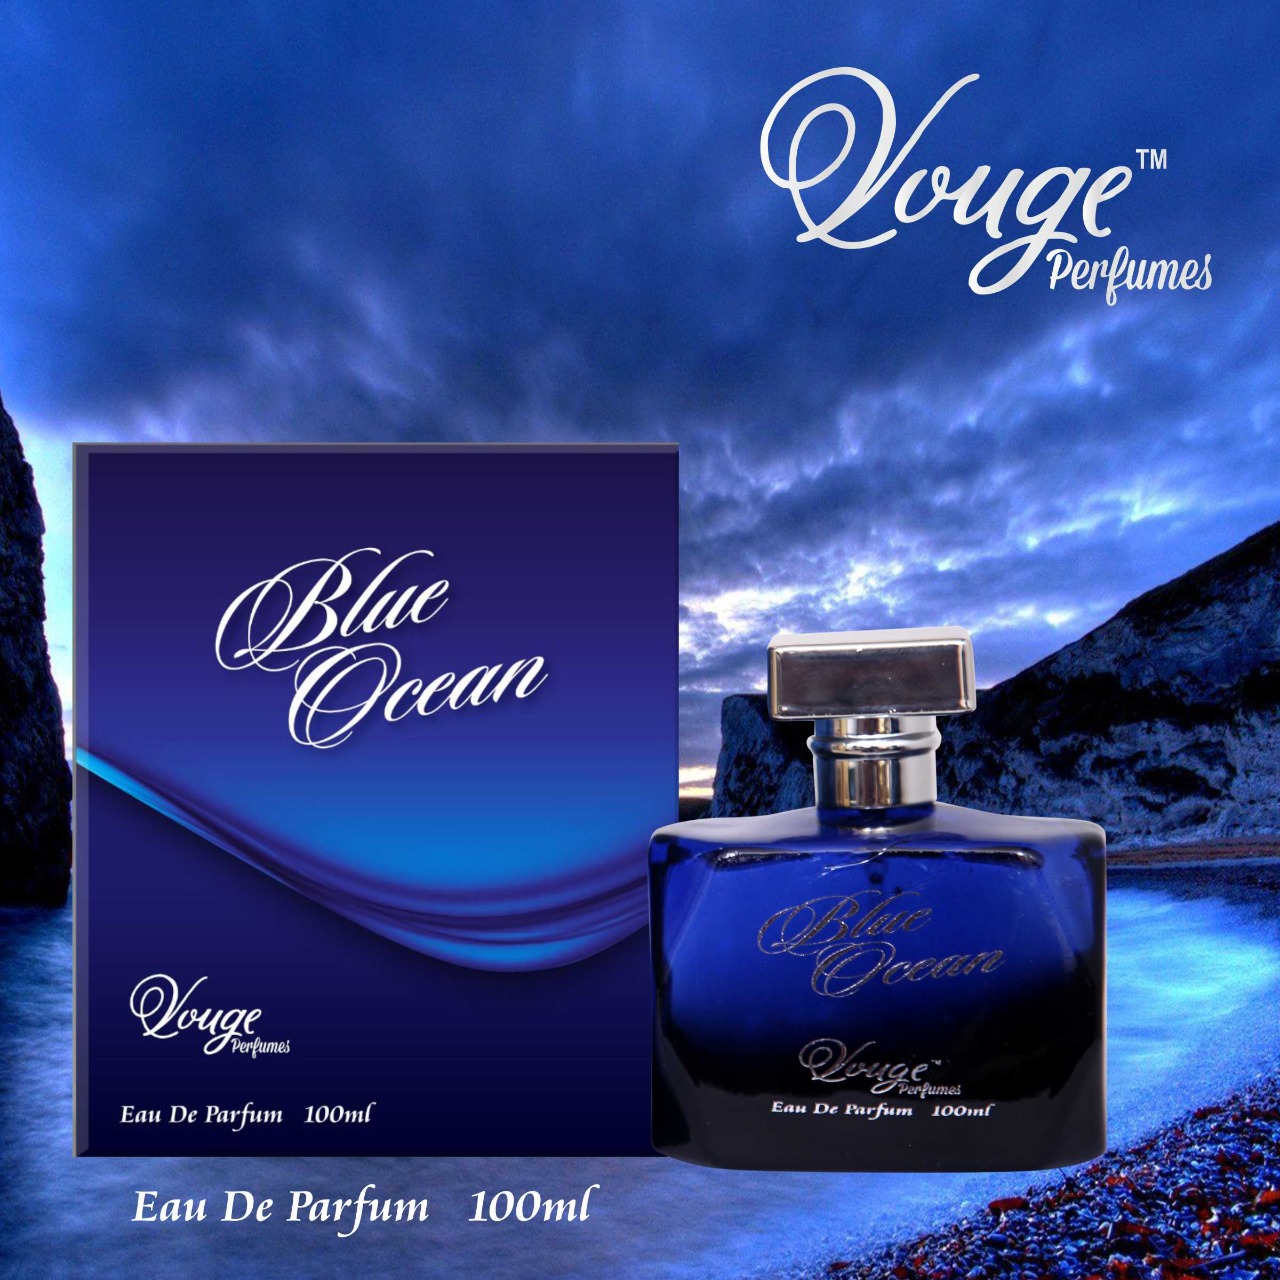 Vouge Perfume - Blue Ocean from Alminar fragnance